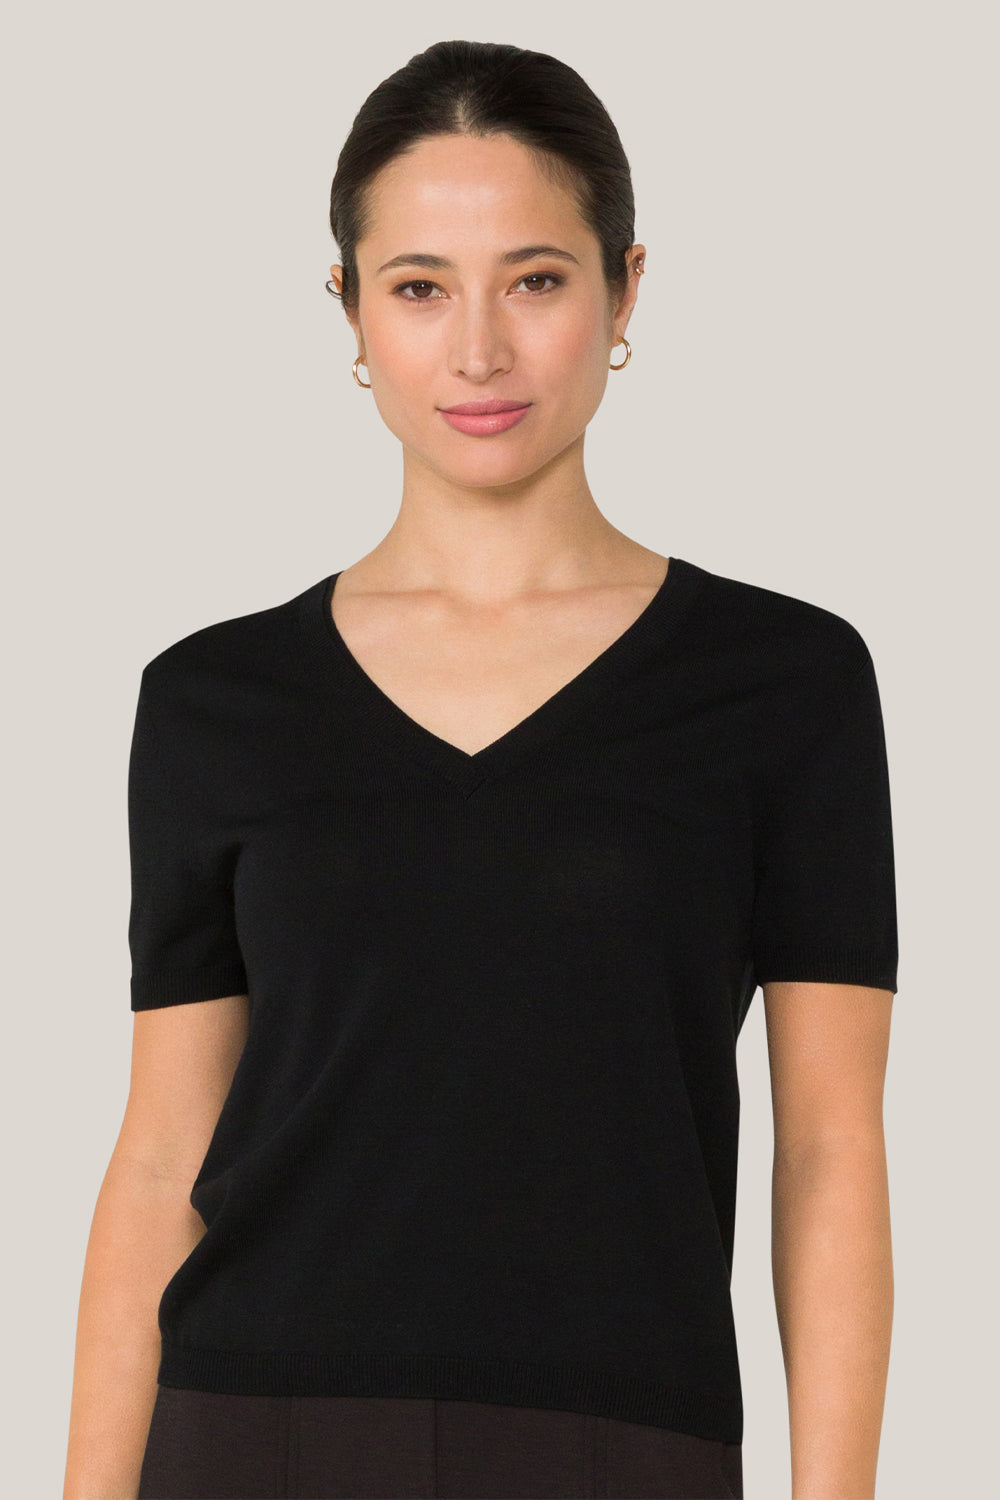 Alala women's knit v-neck t-shirt in black